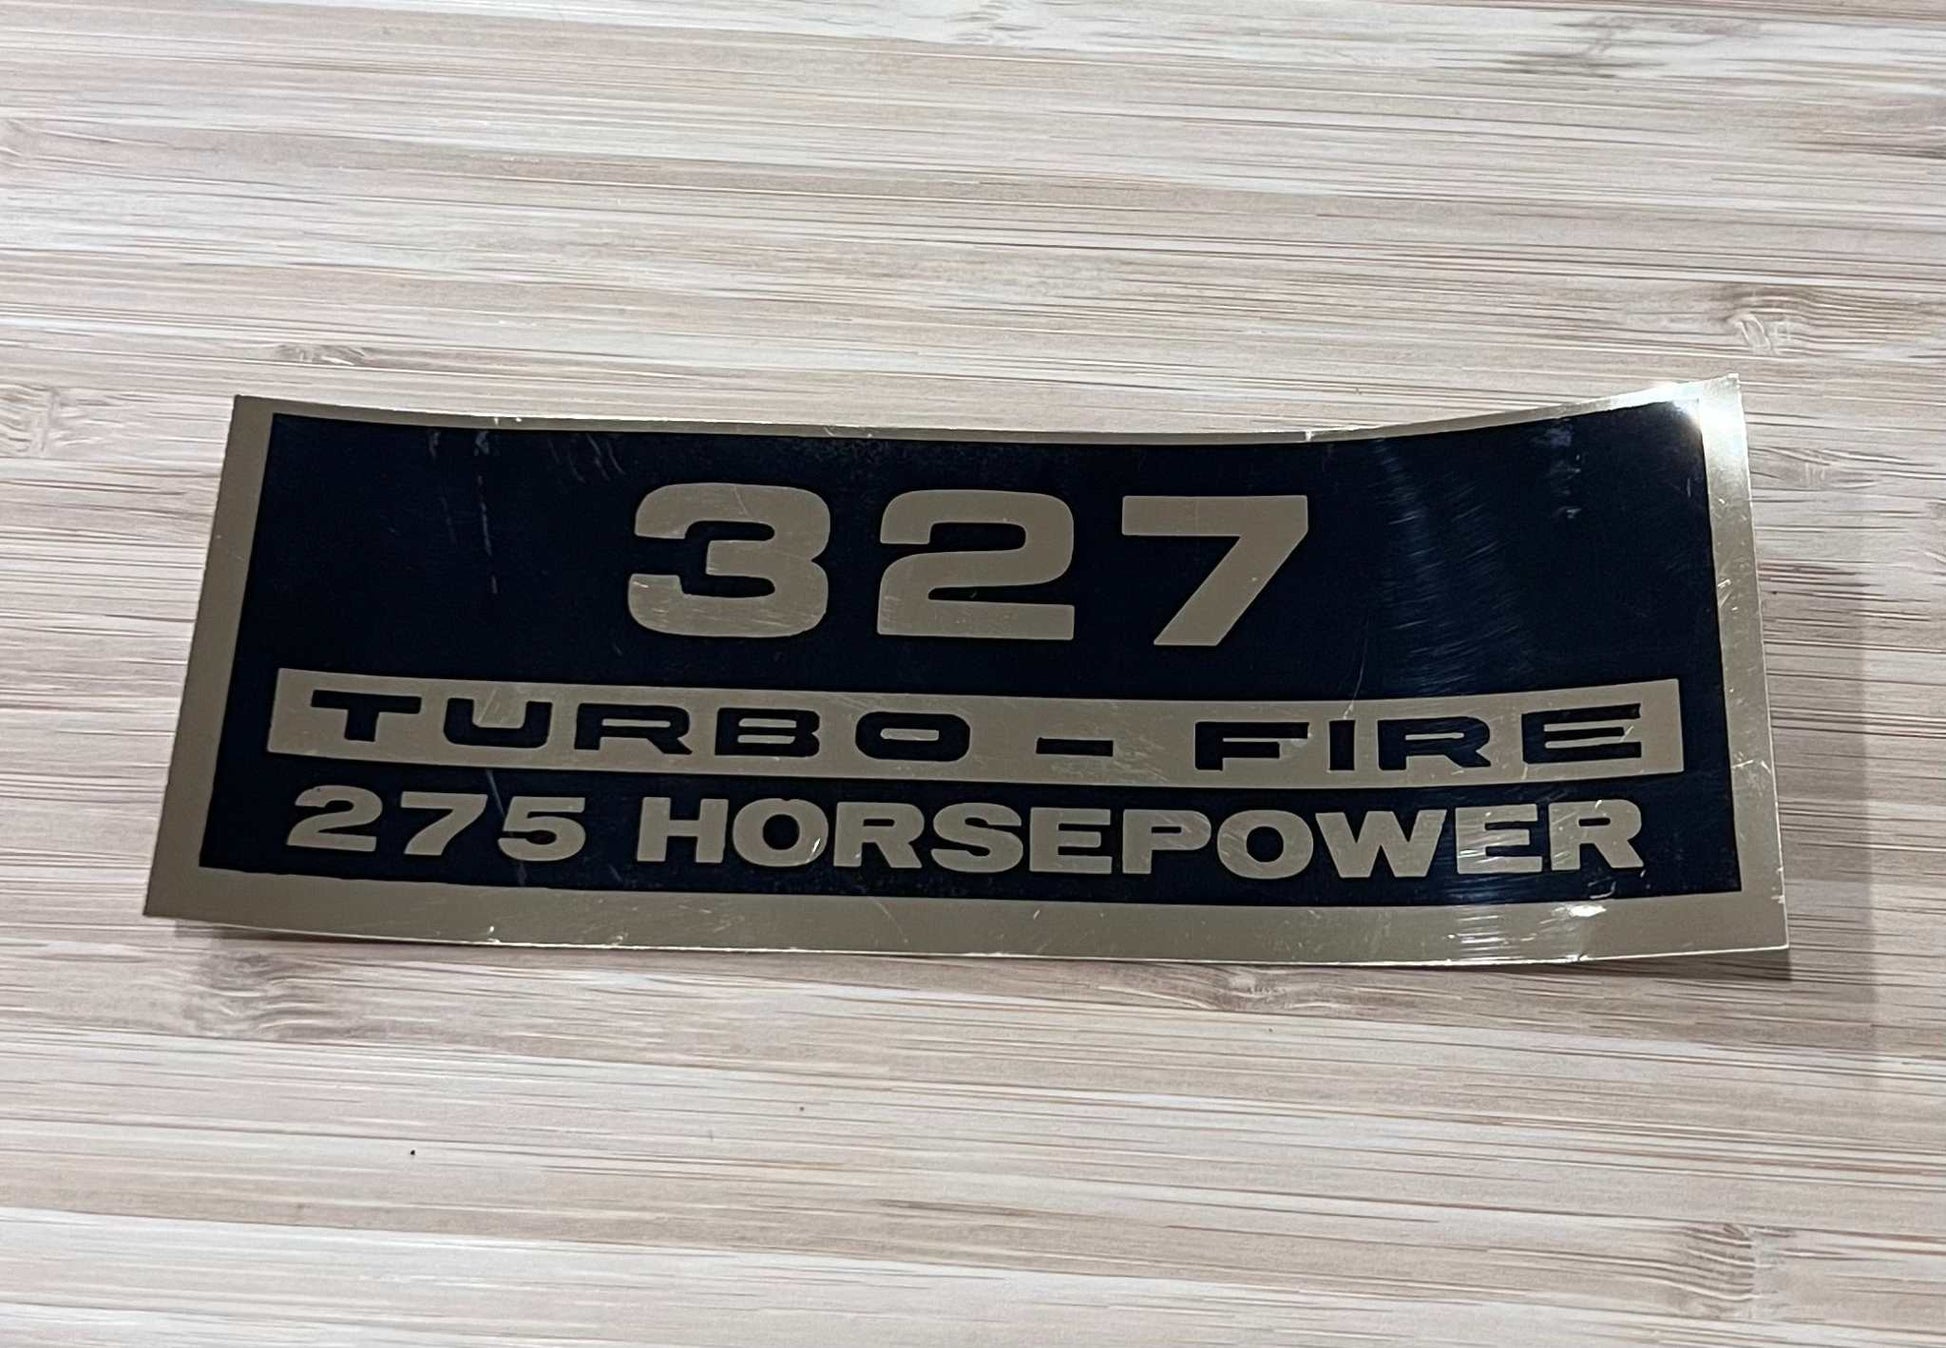 327 Turbo Fire 275 Horsepower Decal